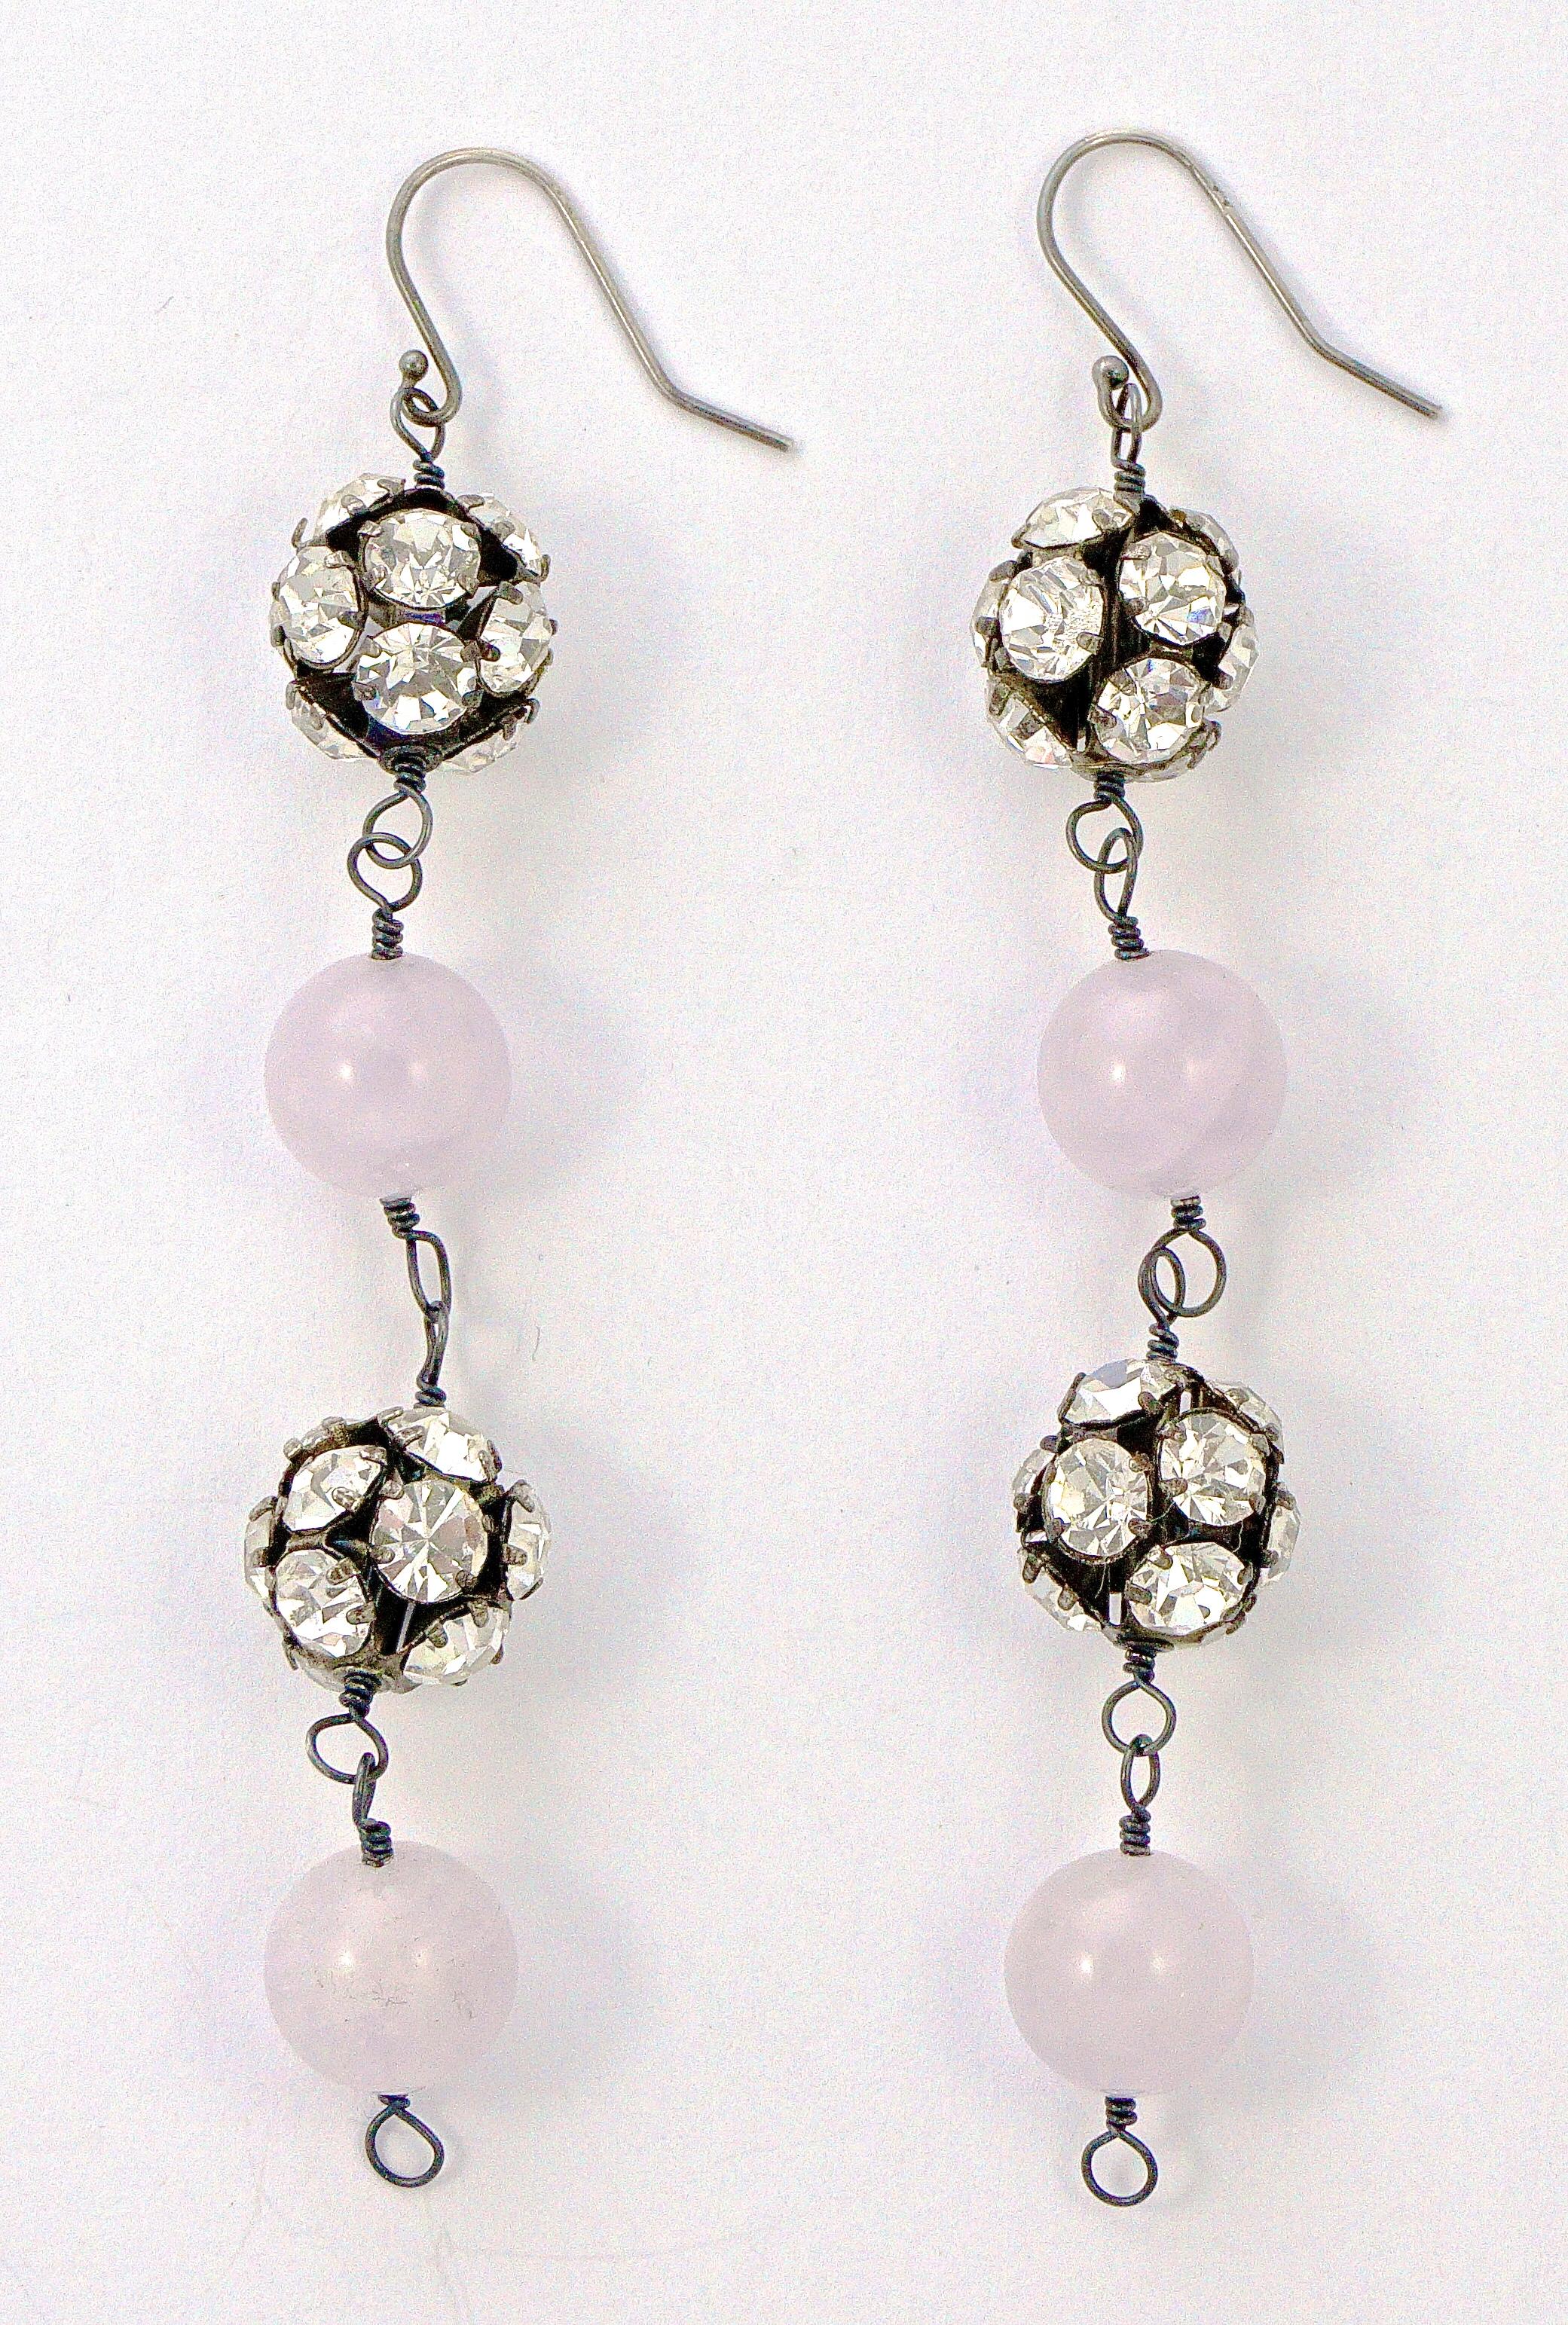 Women's or Men's Silver and Rhinestone Ball Pale Lavender Semi Precious Gemstone Drop Earrings For Sale